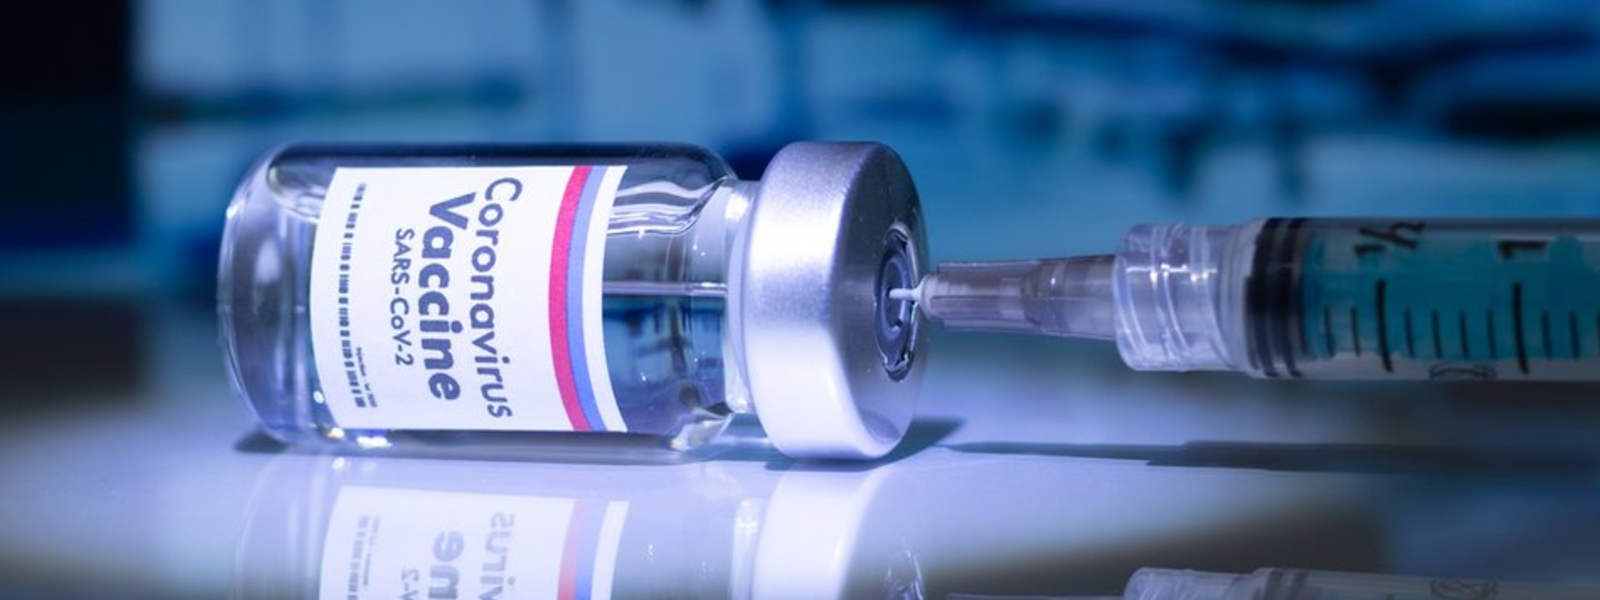 SL to procure 09 million AstraZeneca COVID-19 vaccines